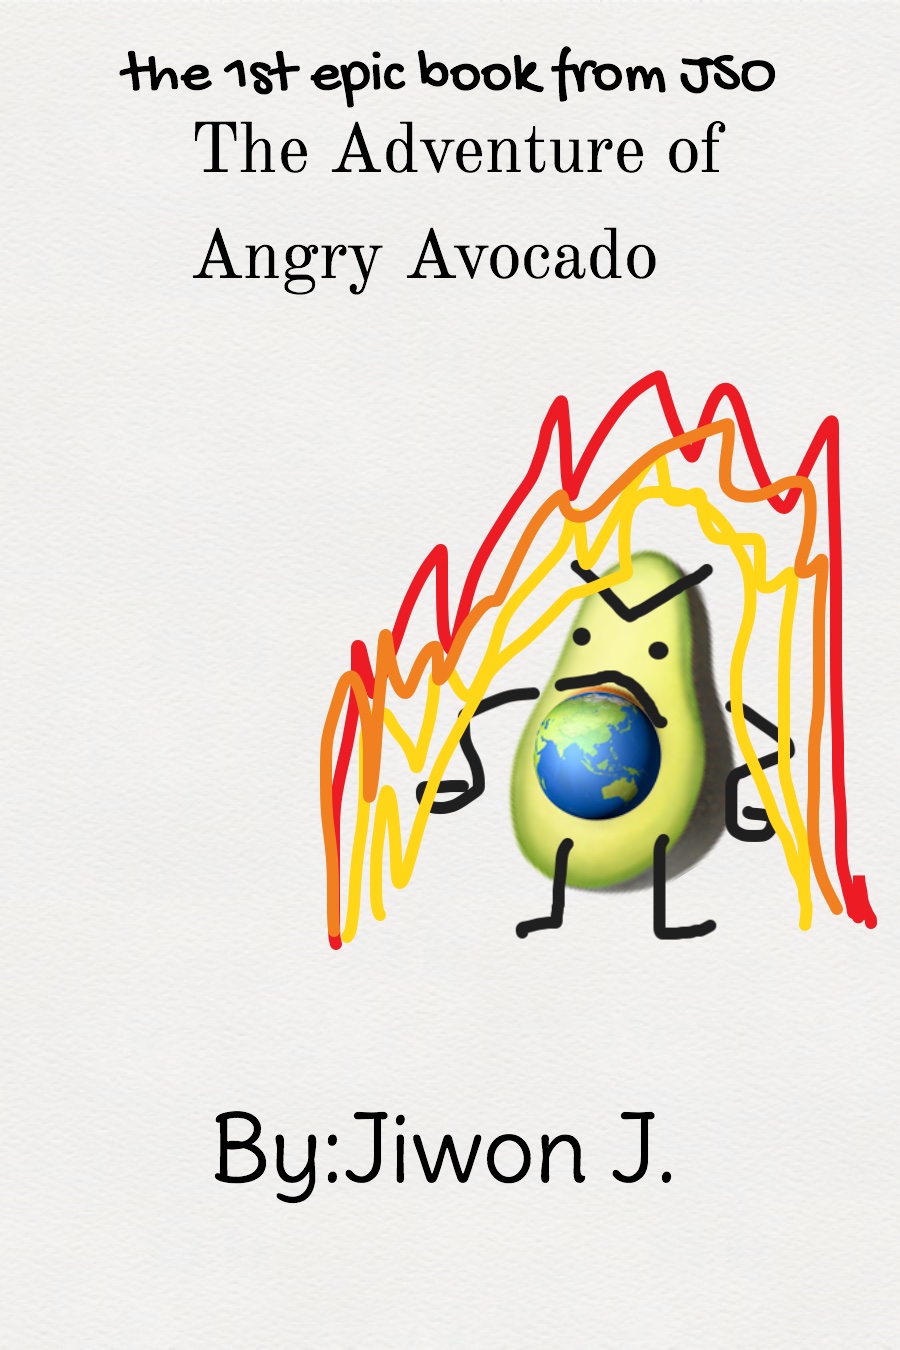 Angry Avocado by Jiwon J